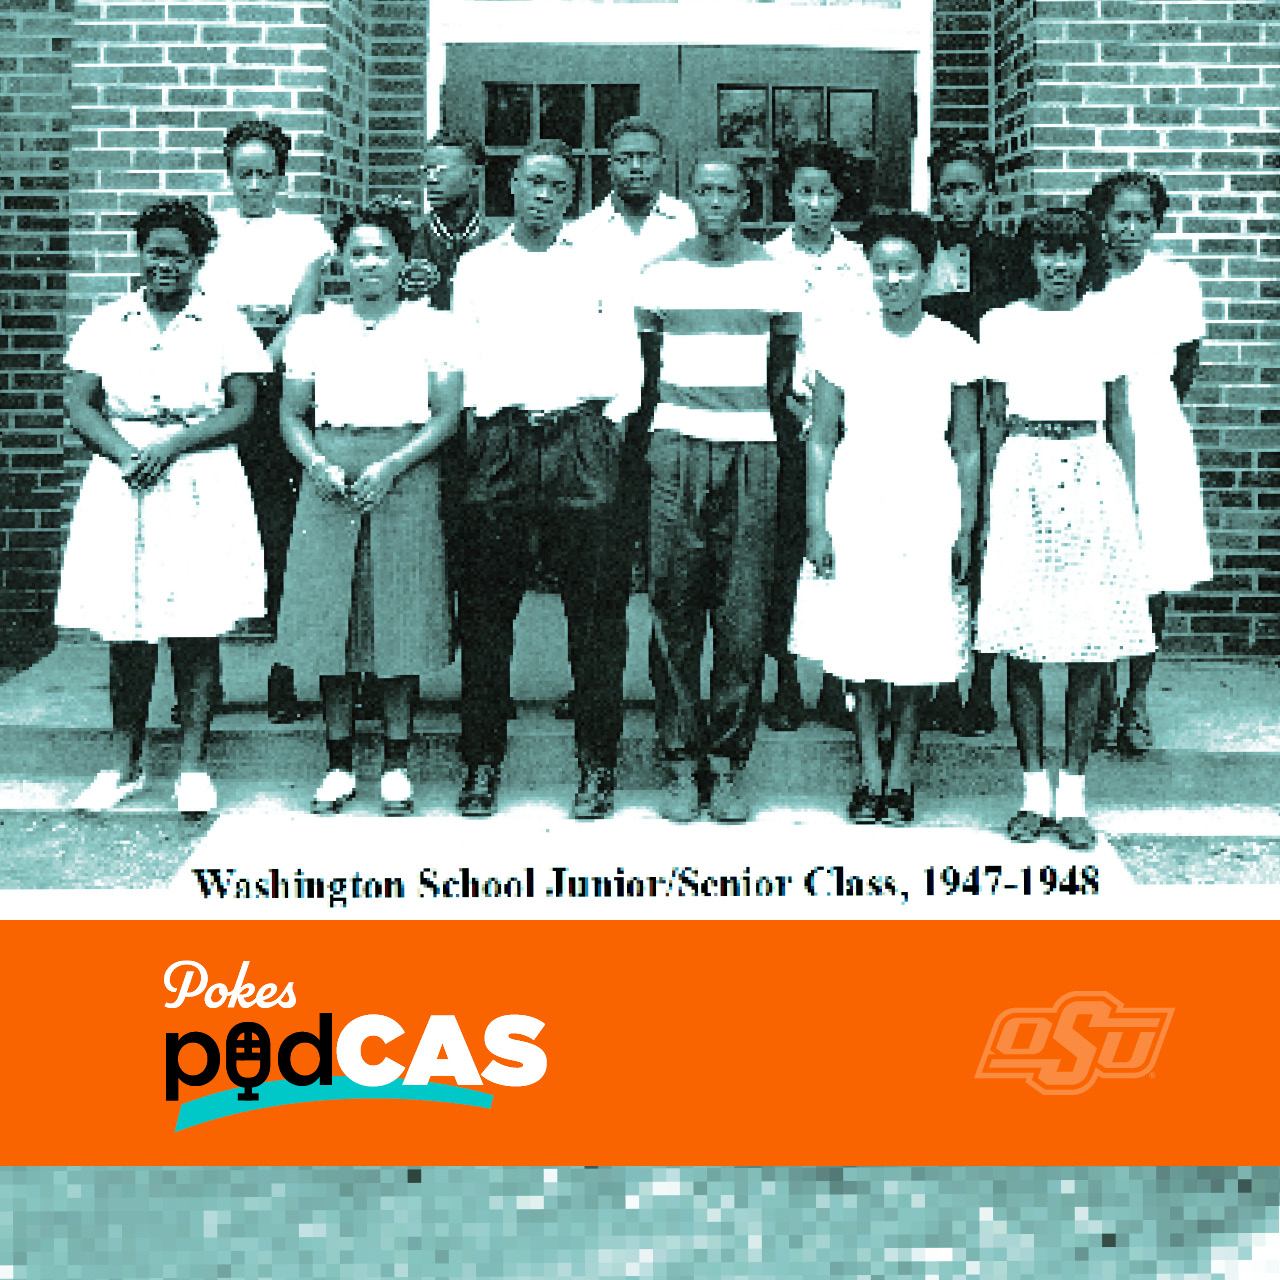 Washington School: Then and Now – Dr. Laura Arata